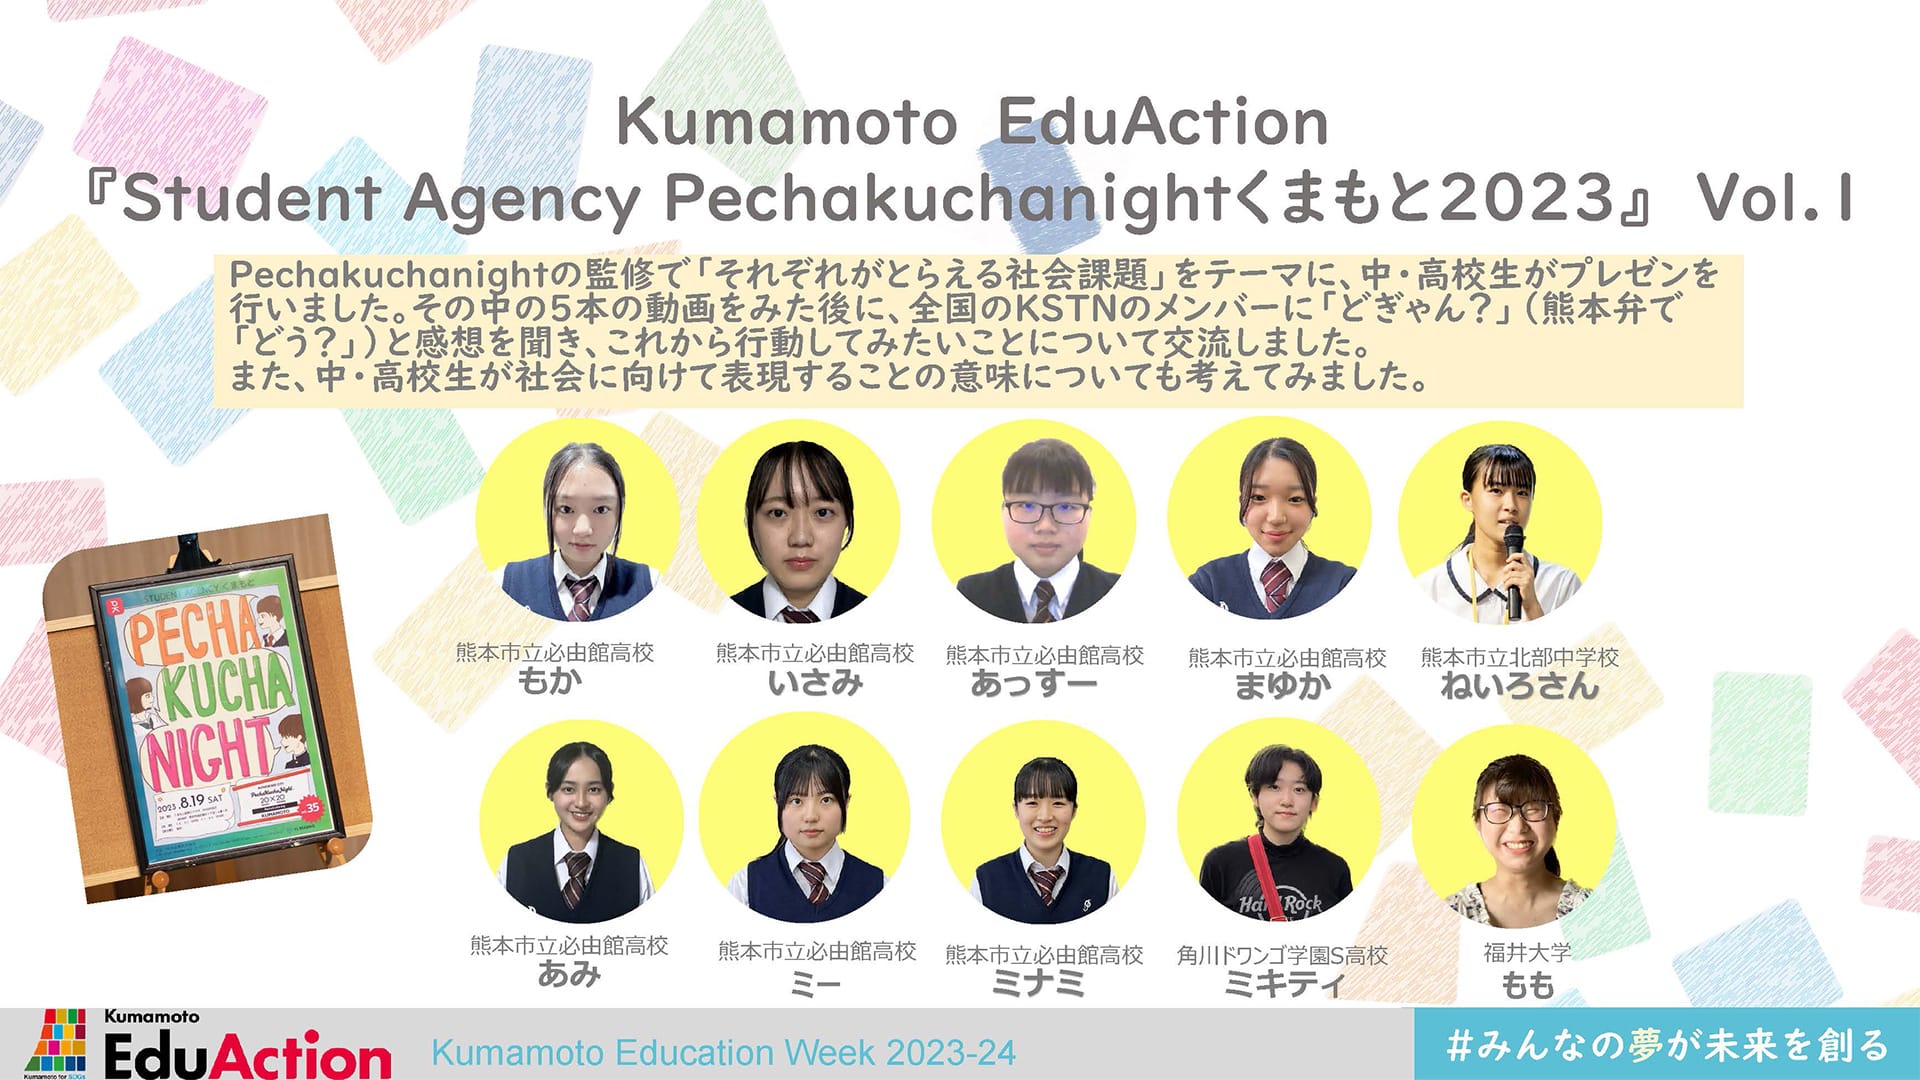  Kumamoto EduAction『Student Agency   Pechakuchanightくまもと2023』Vol.1